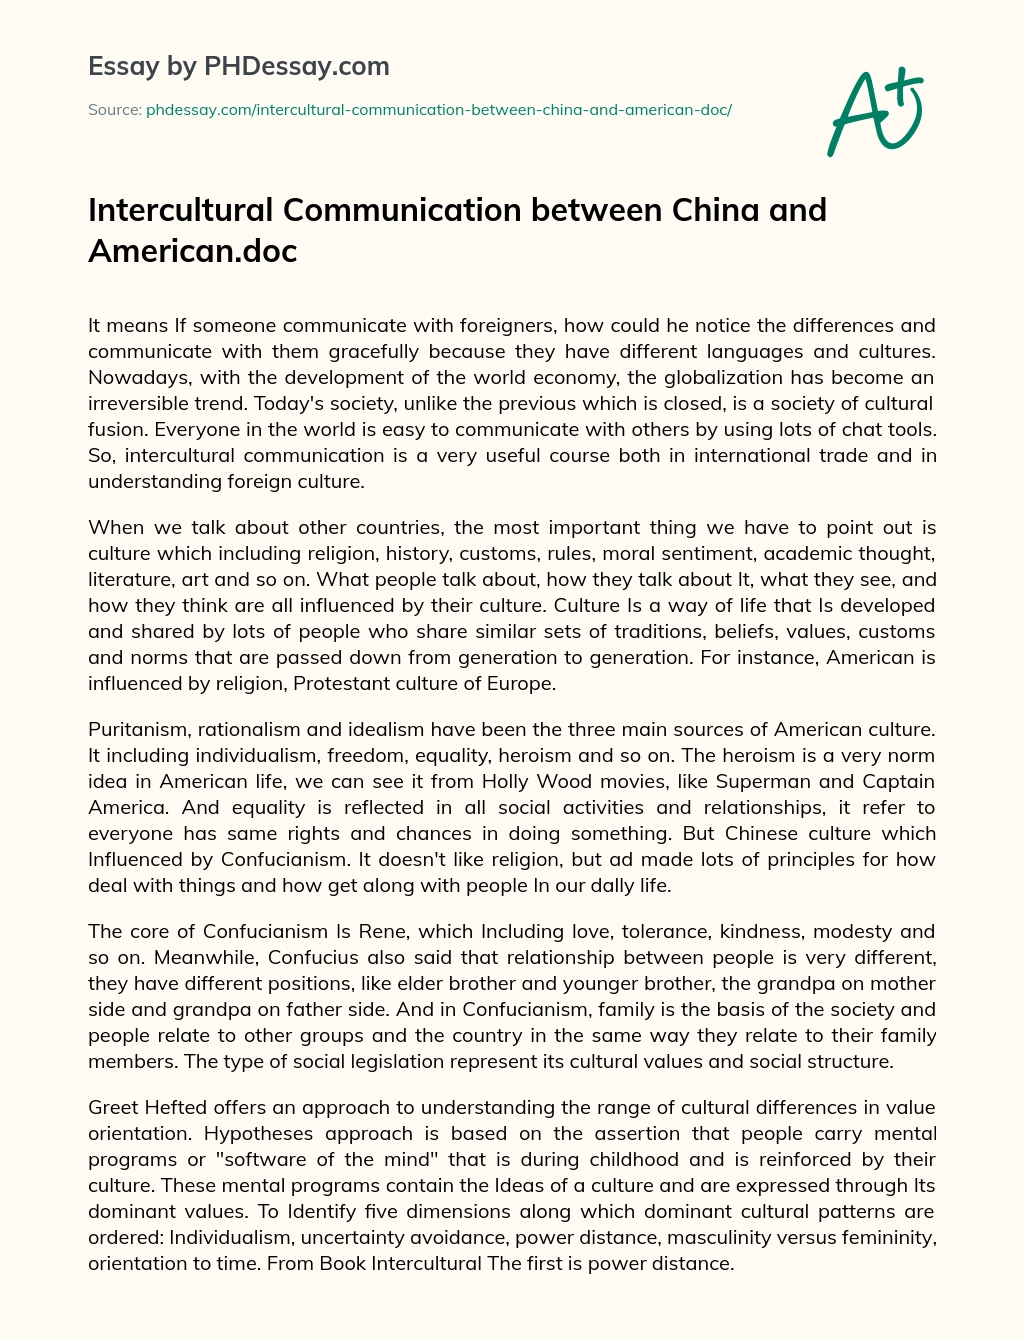 Intercultural Communication between China and American.doc essay